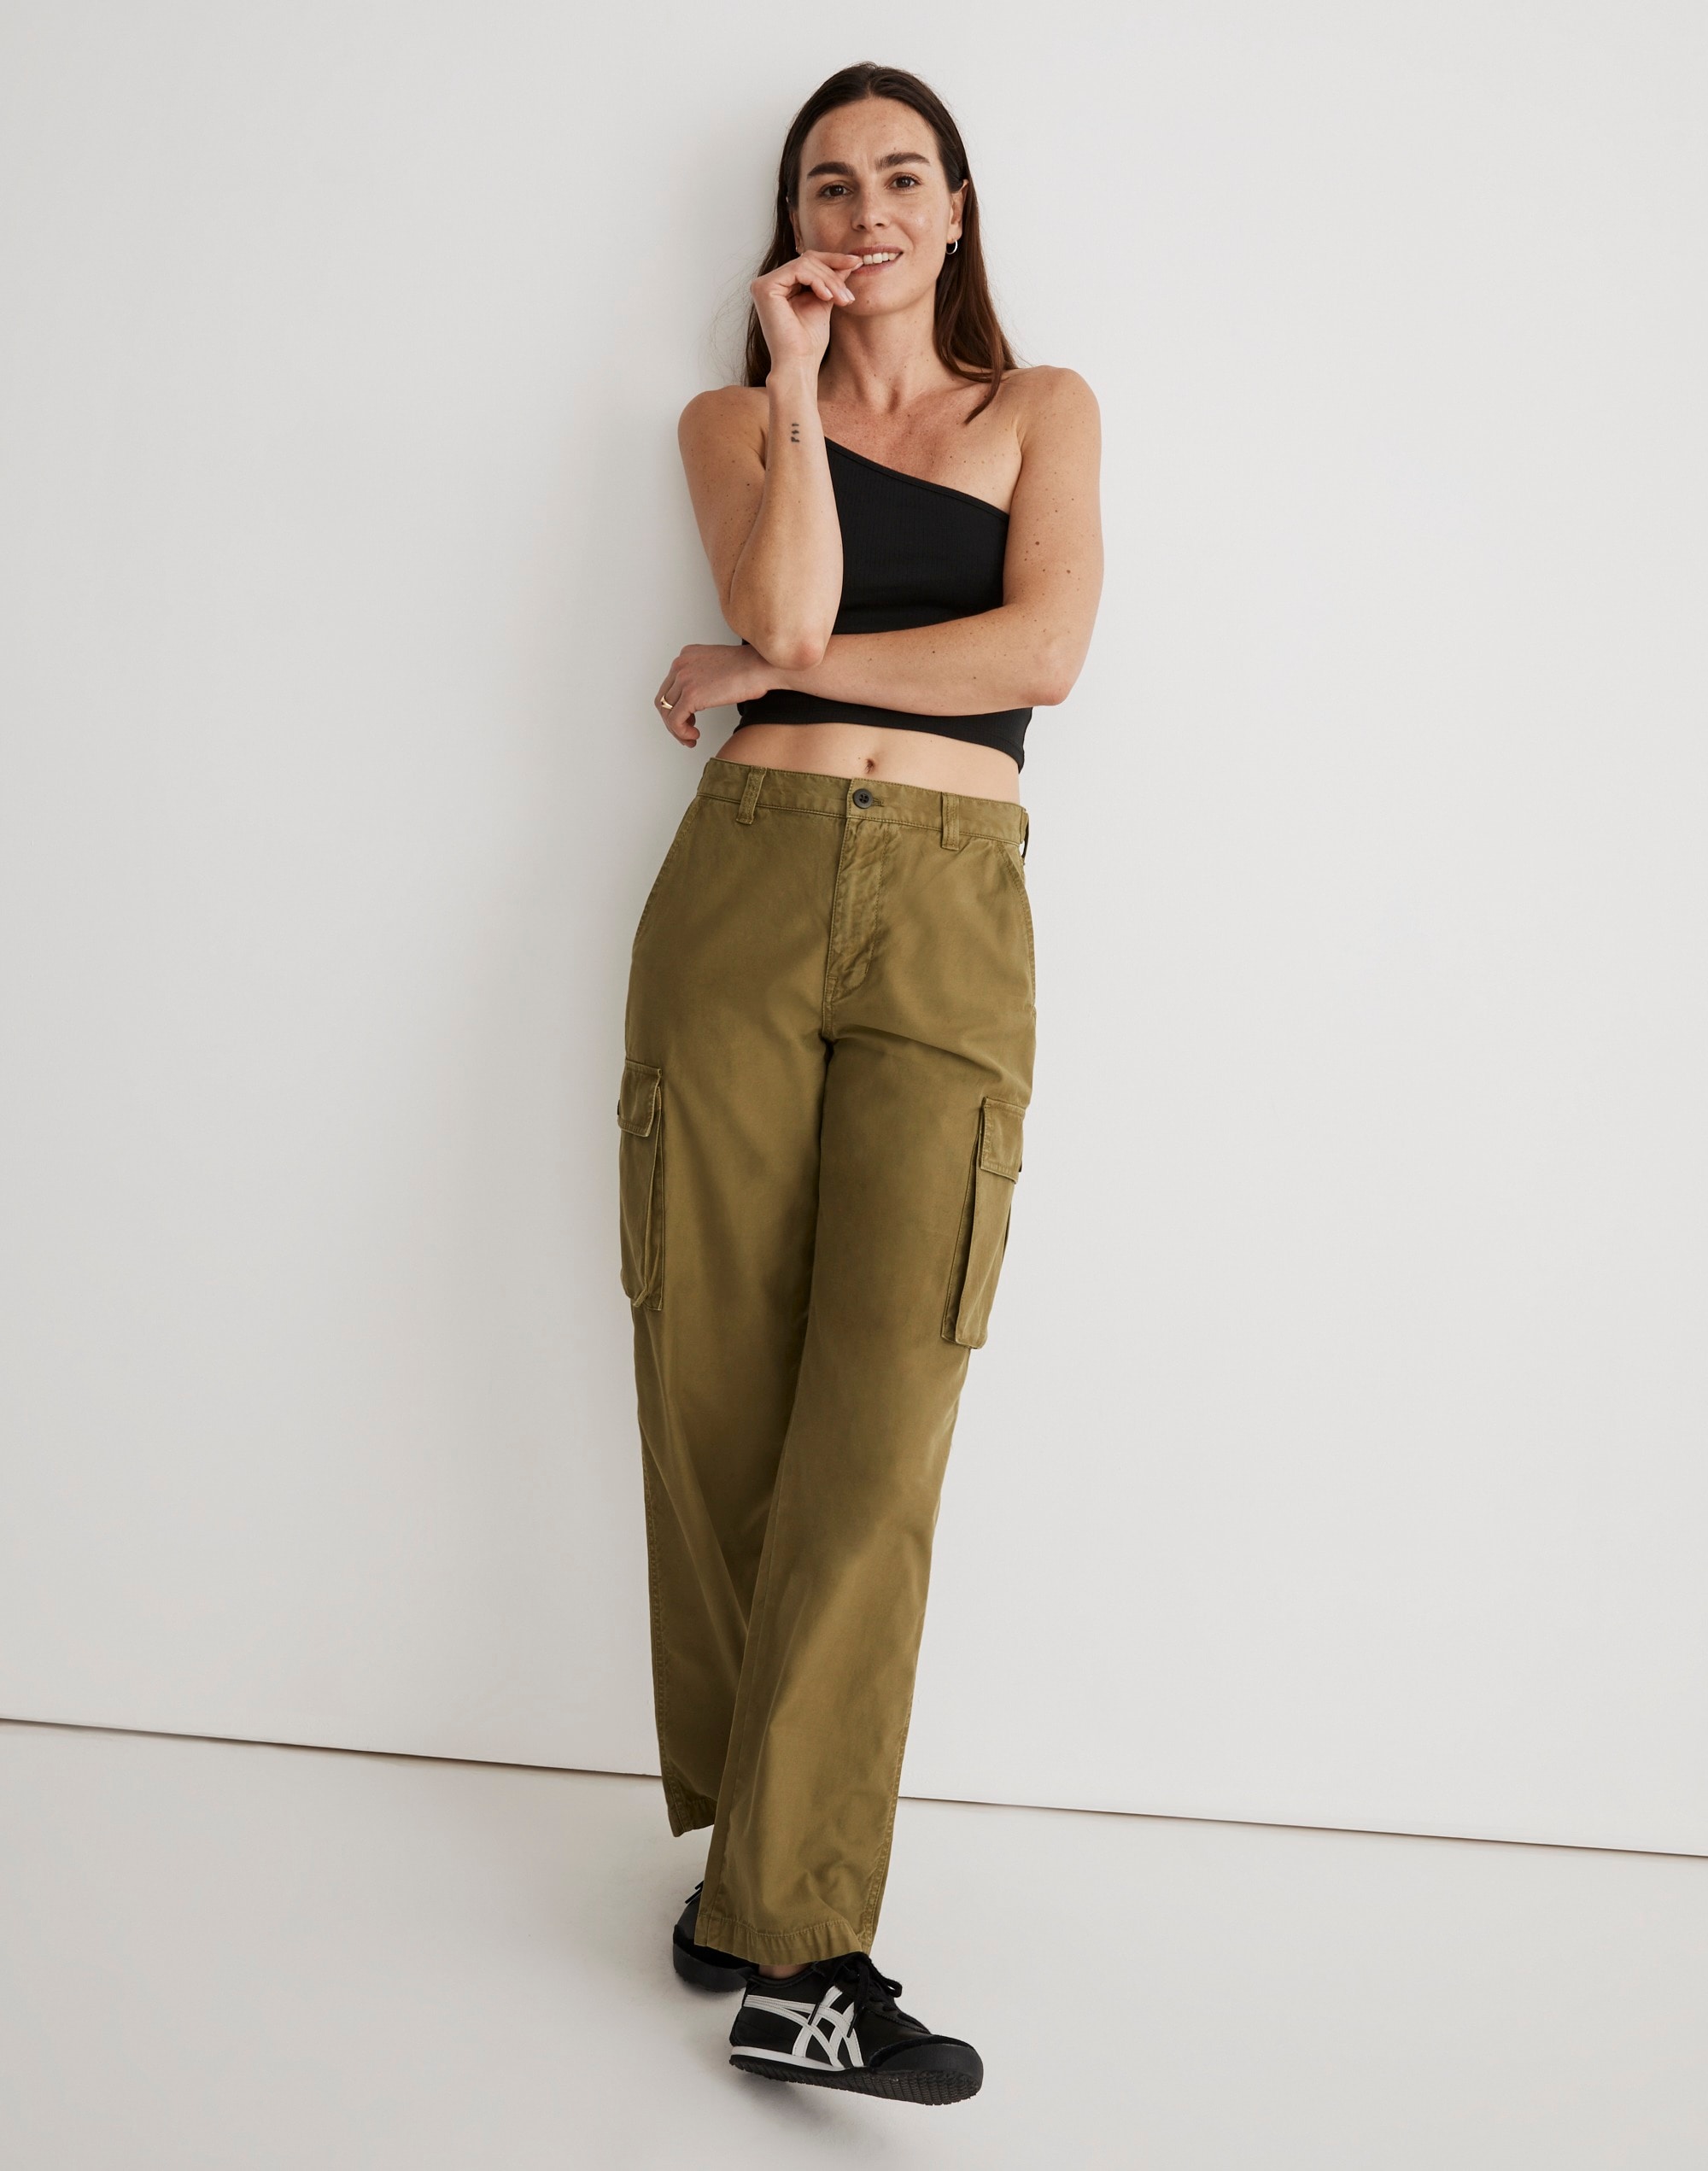 Women's High Waist Fashion Designer Plaid Cargo Pants (Plus Size) –  International Women's Clothing - Women's fashion designer plus size clothes